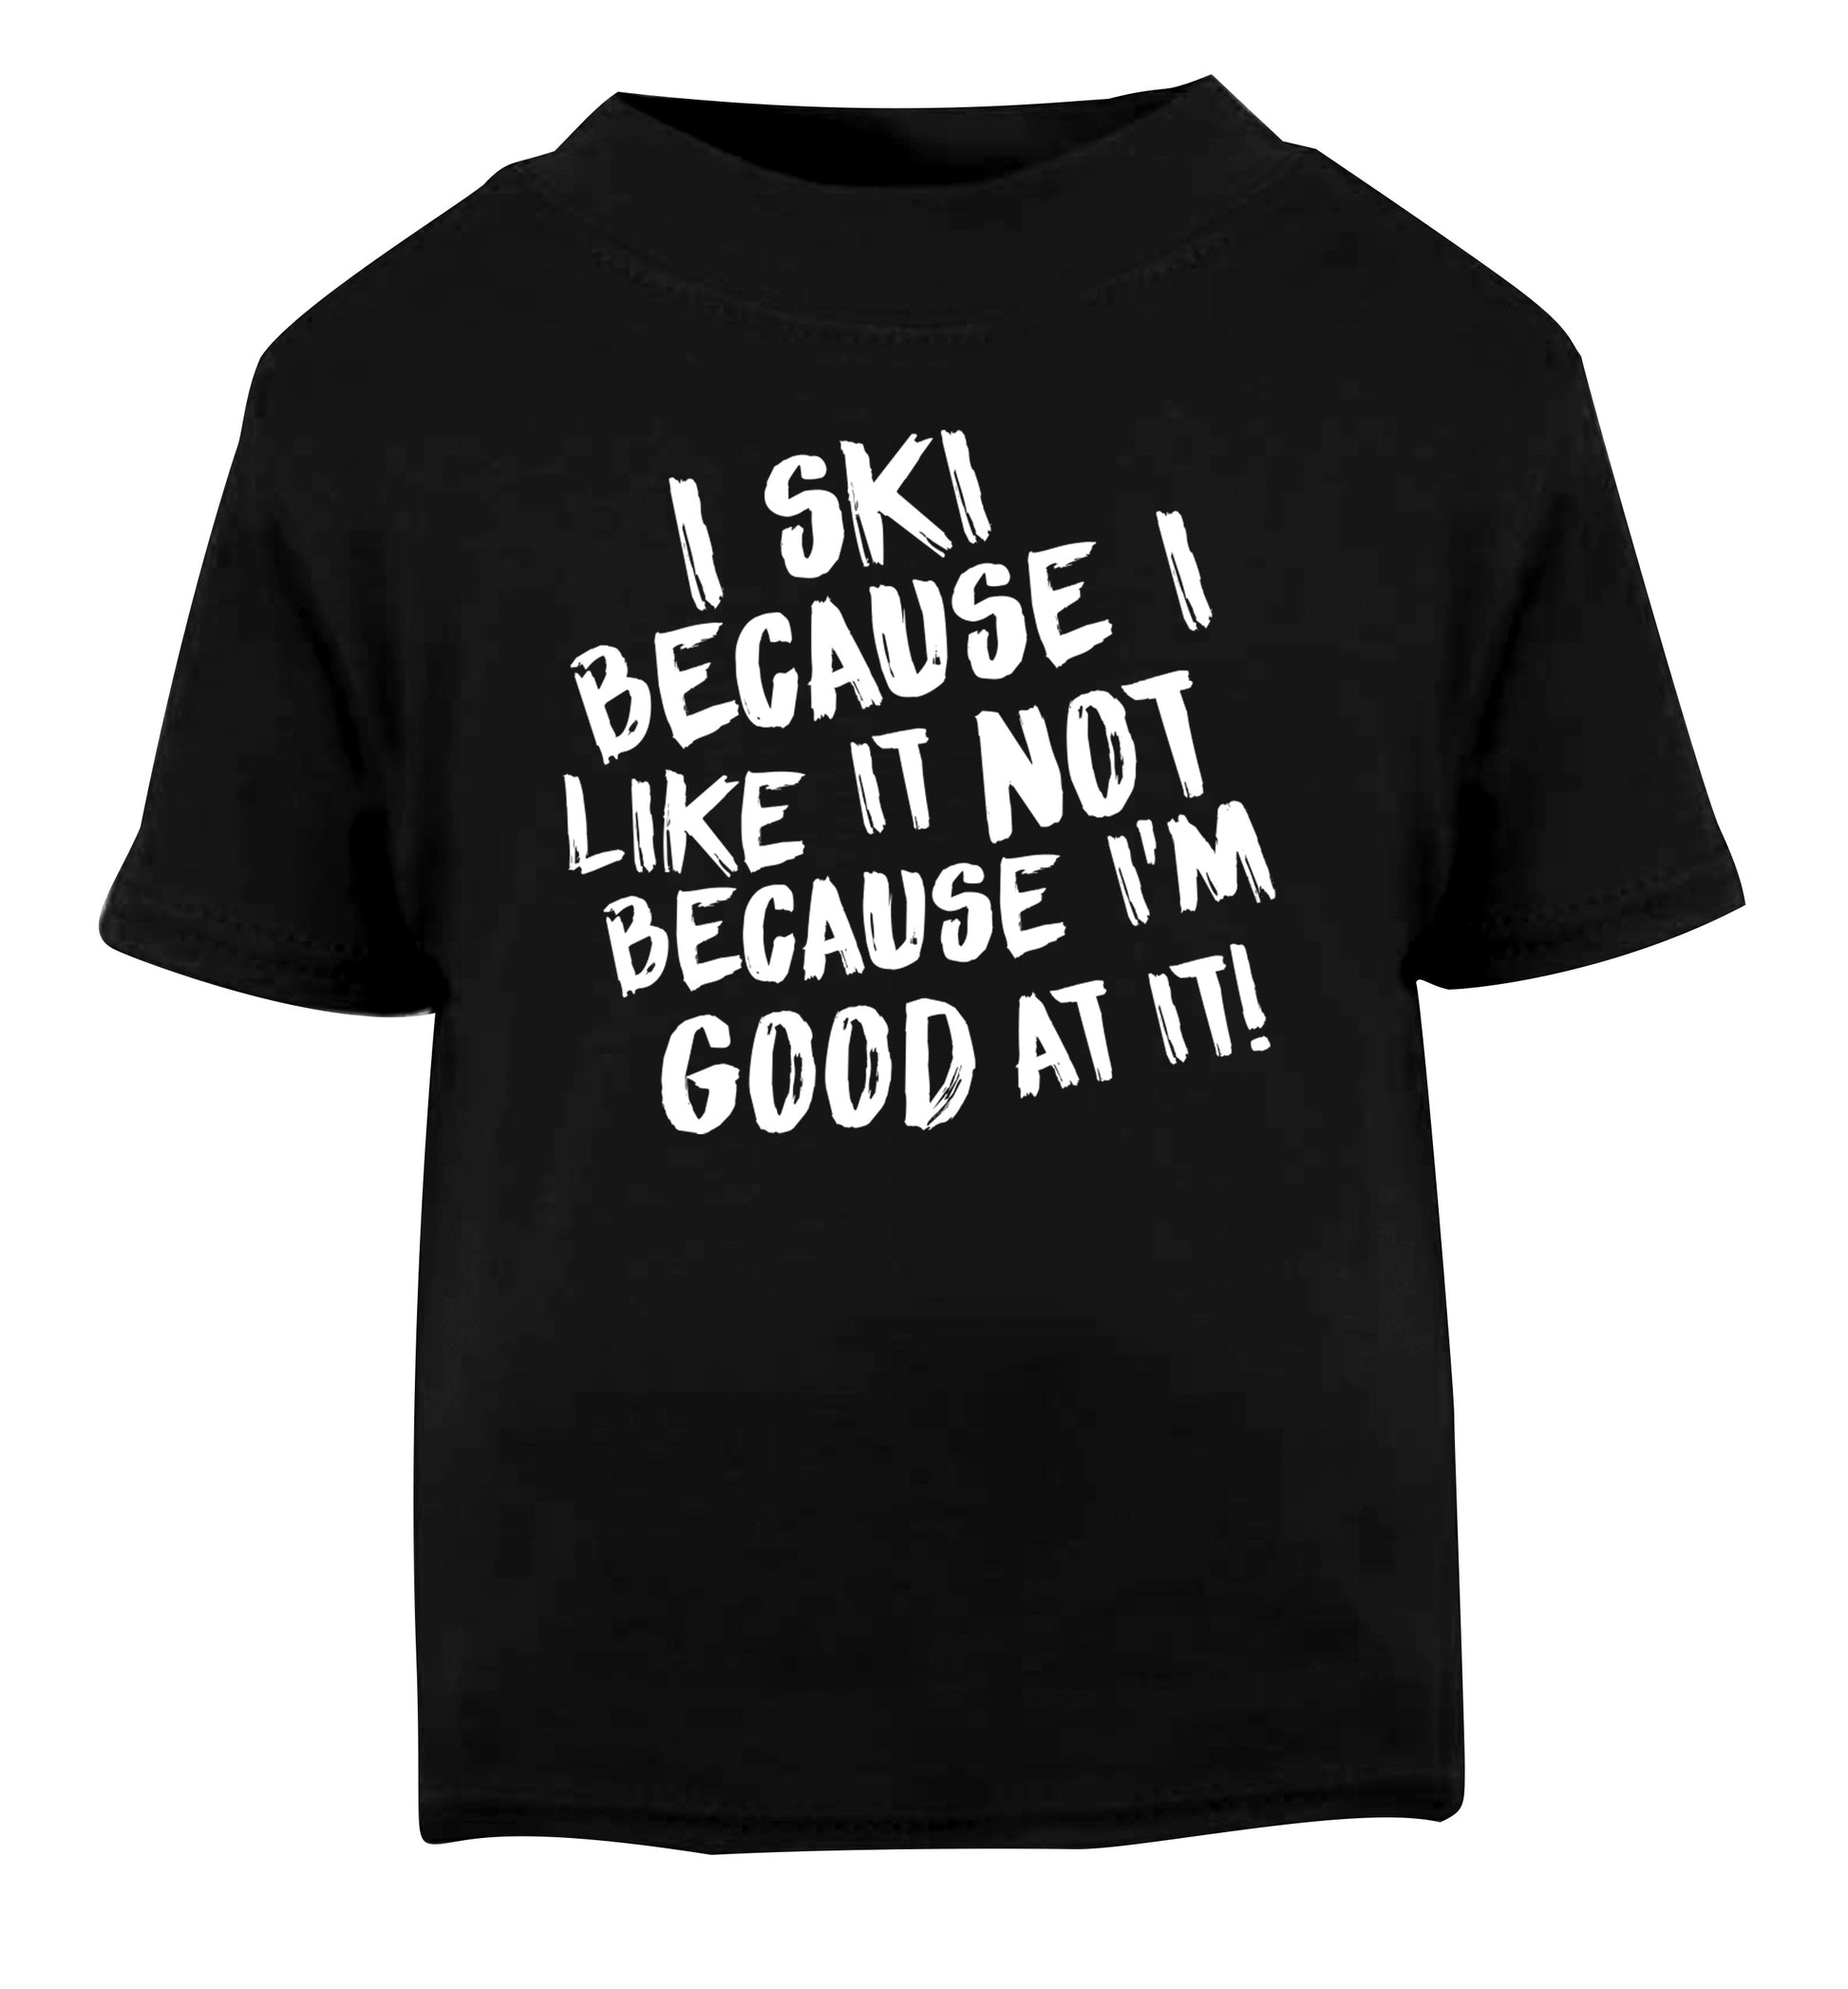 I ski because I like it not because I'm good at it Black Baby Toddler Tshirt 2 years